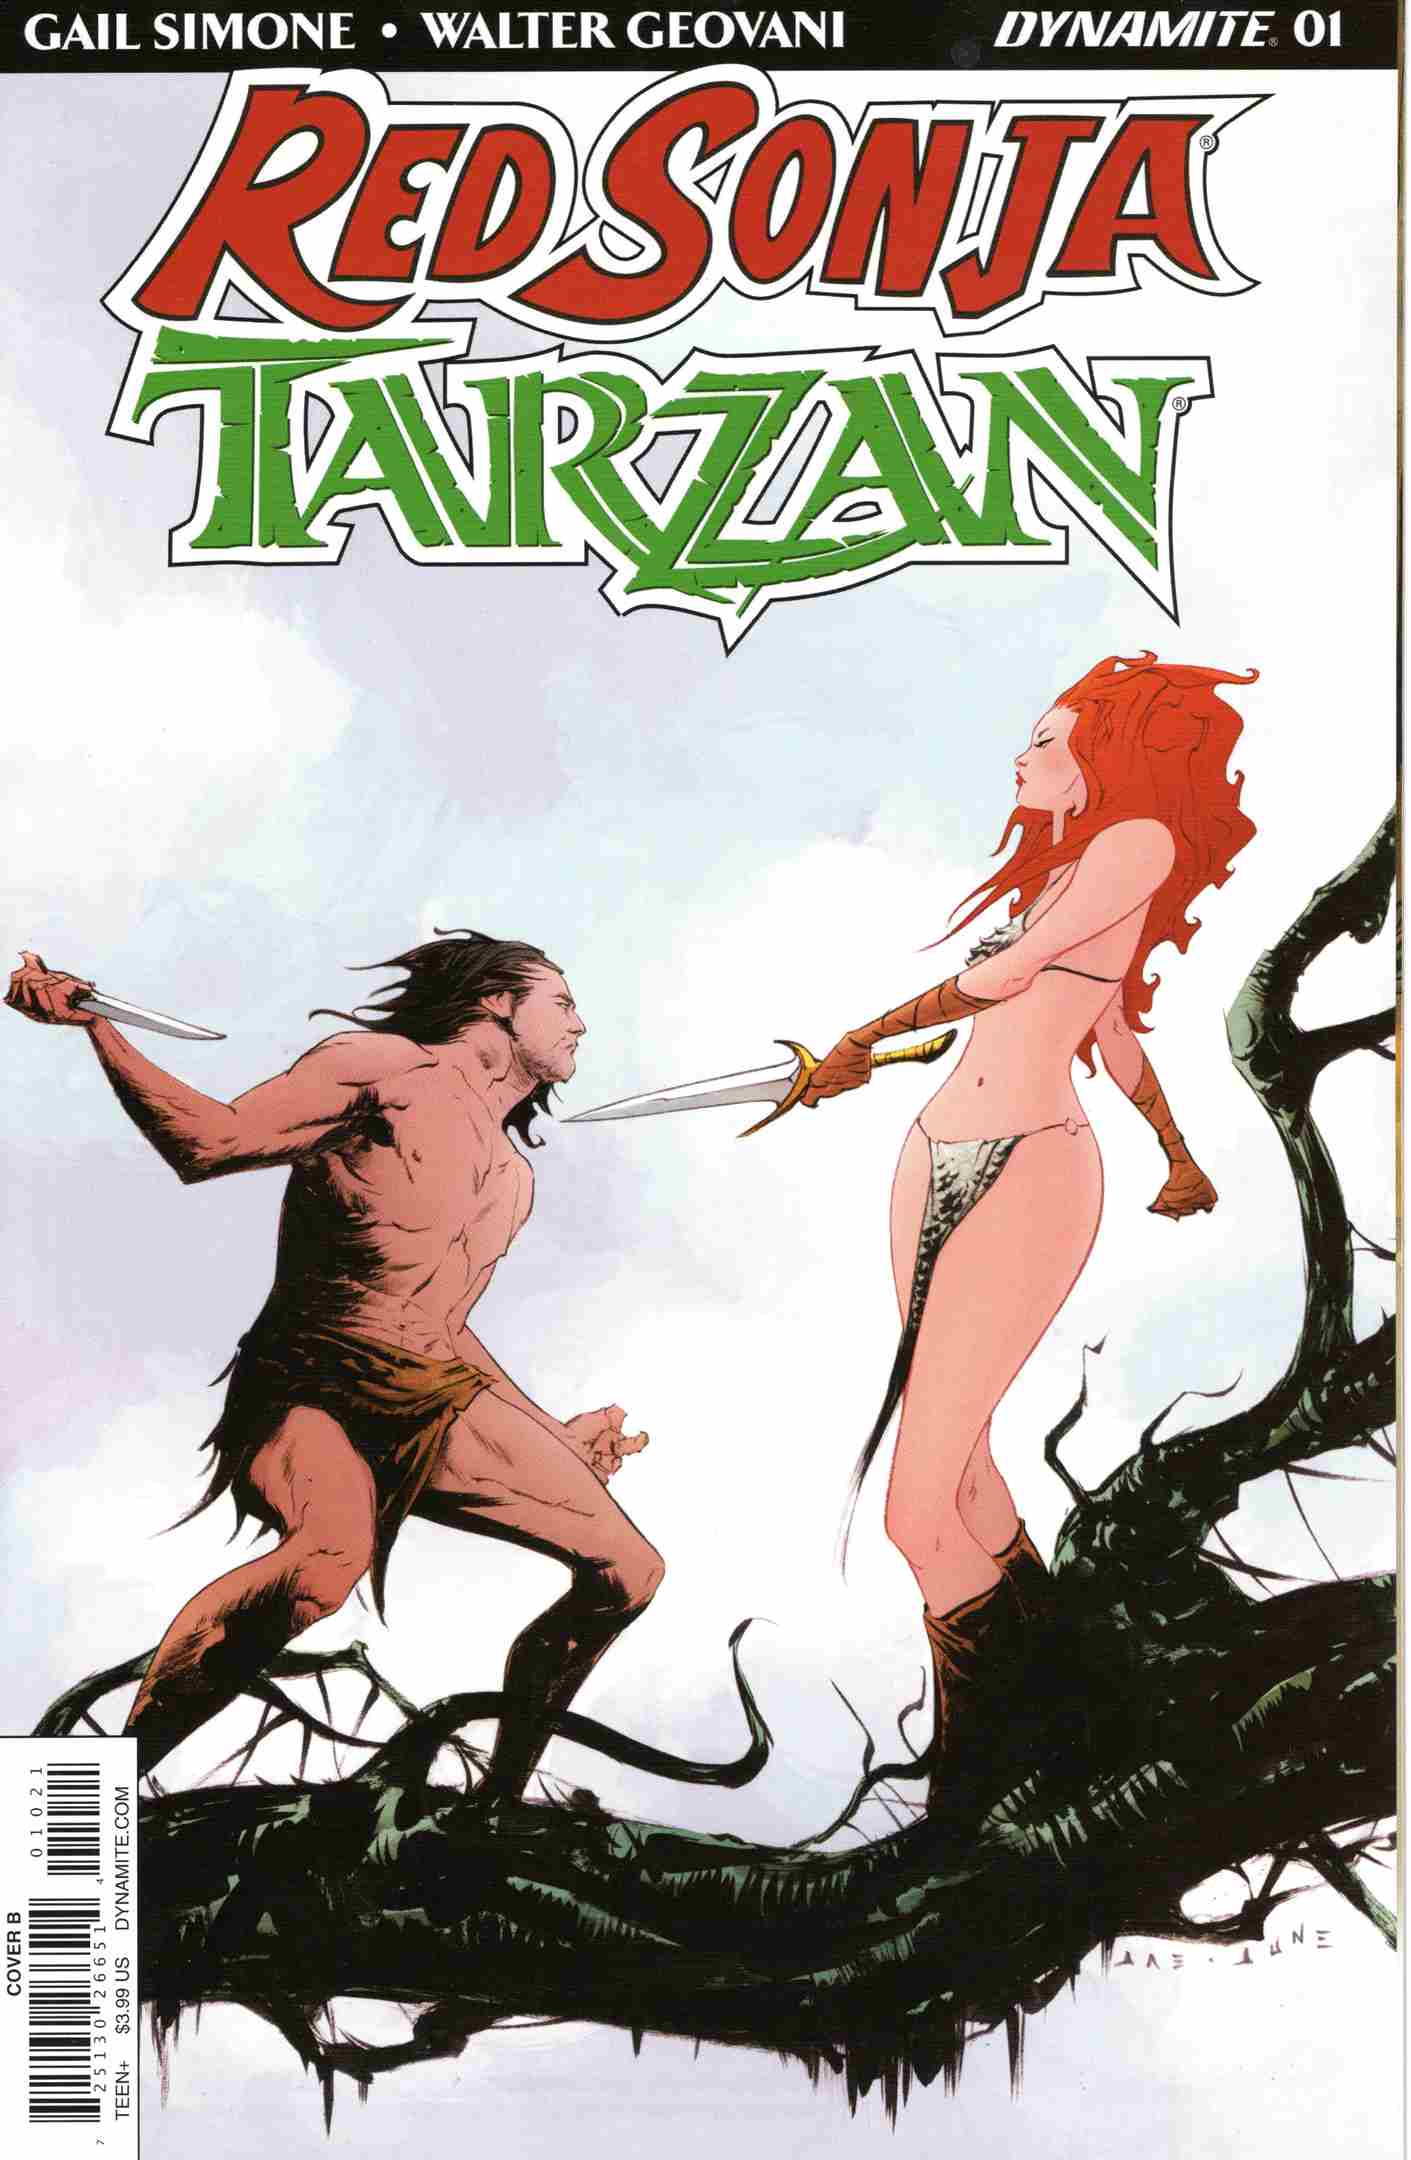 RED SONJA TARZAN B COVERS (#1- #6) -SET-